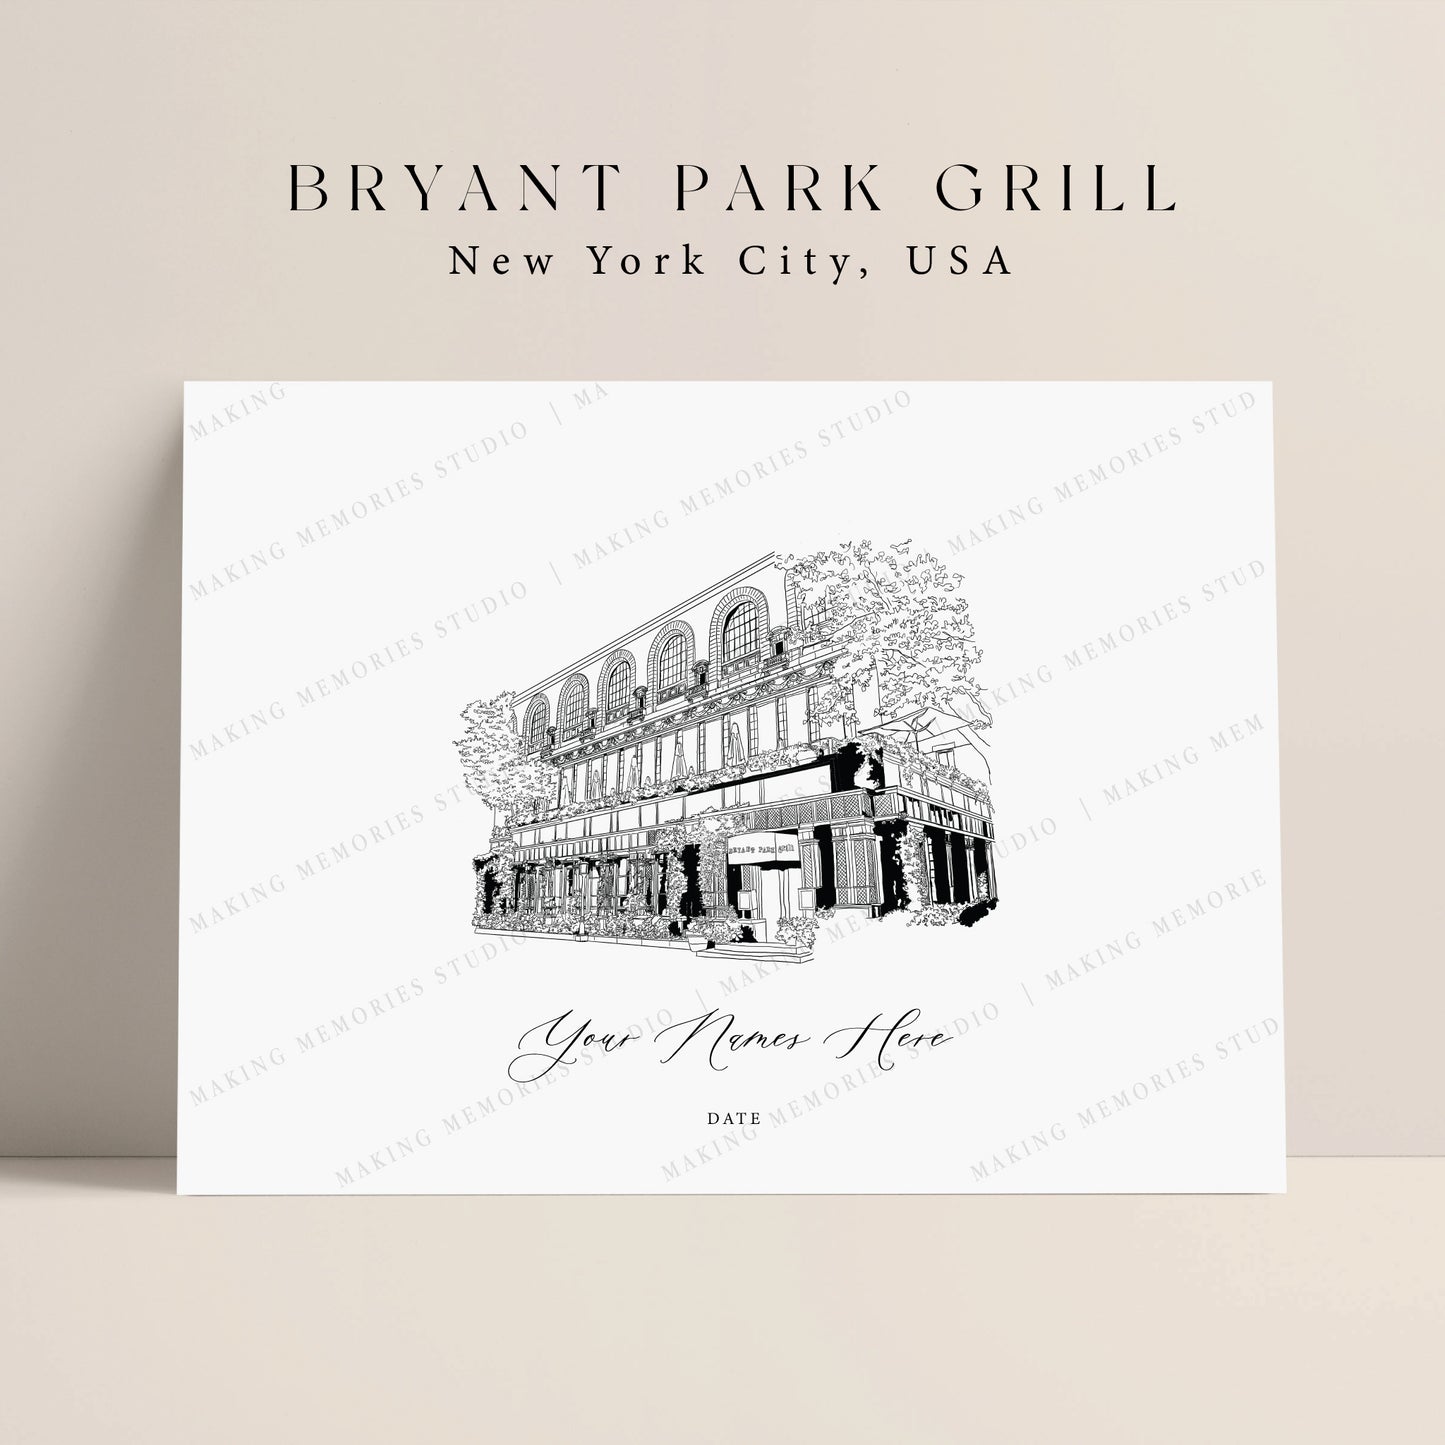 Bryant Park Grill - New York City, USA